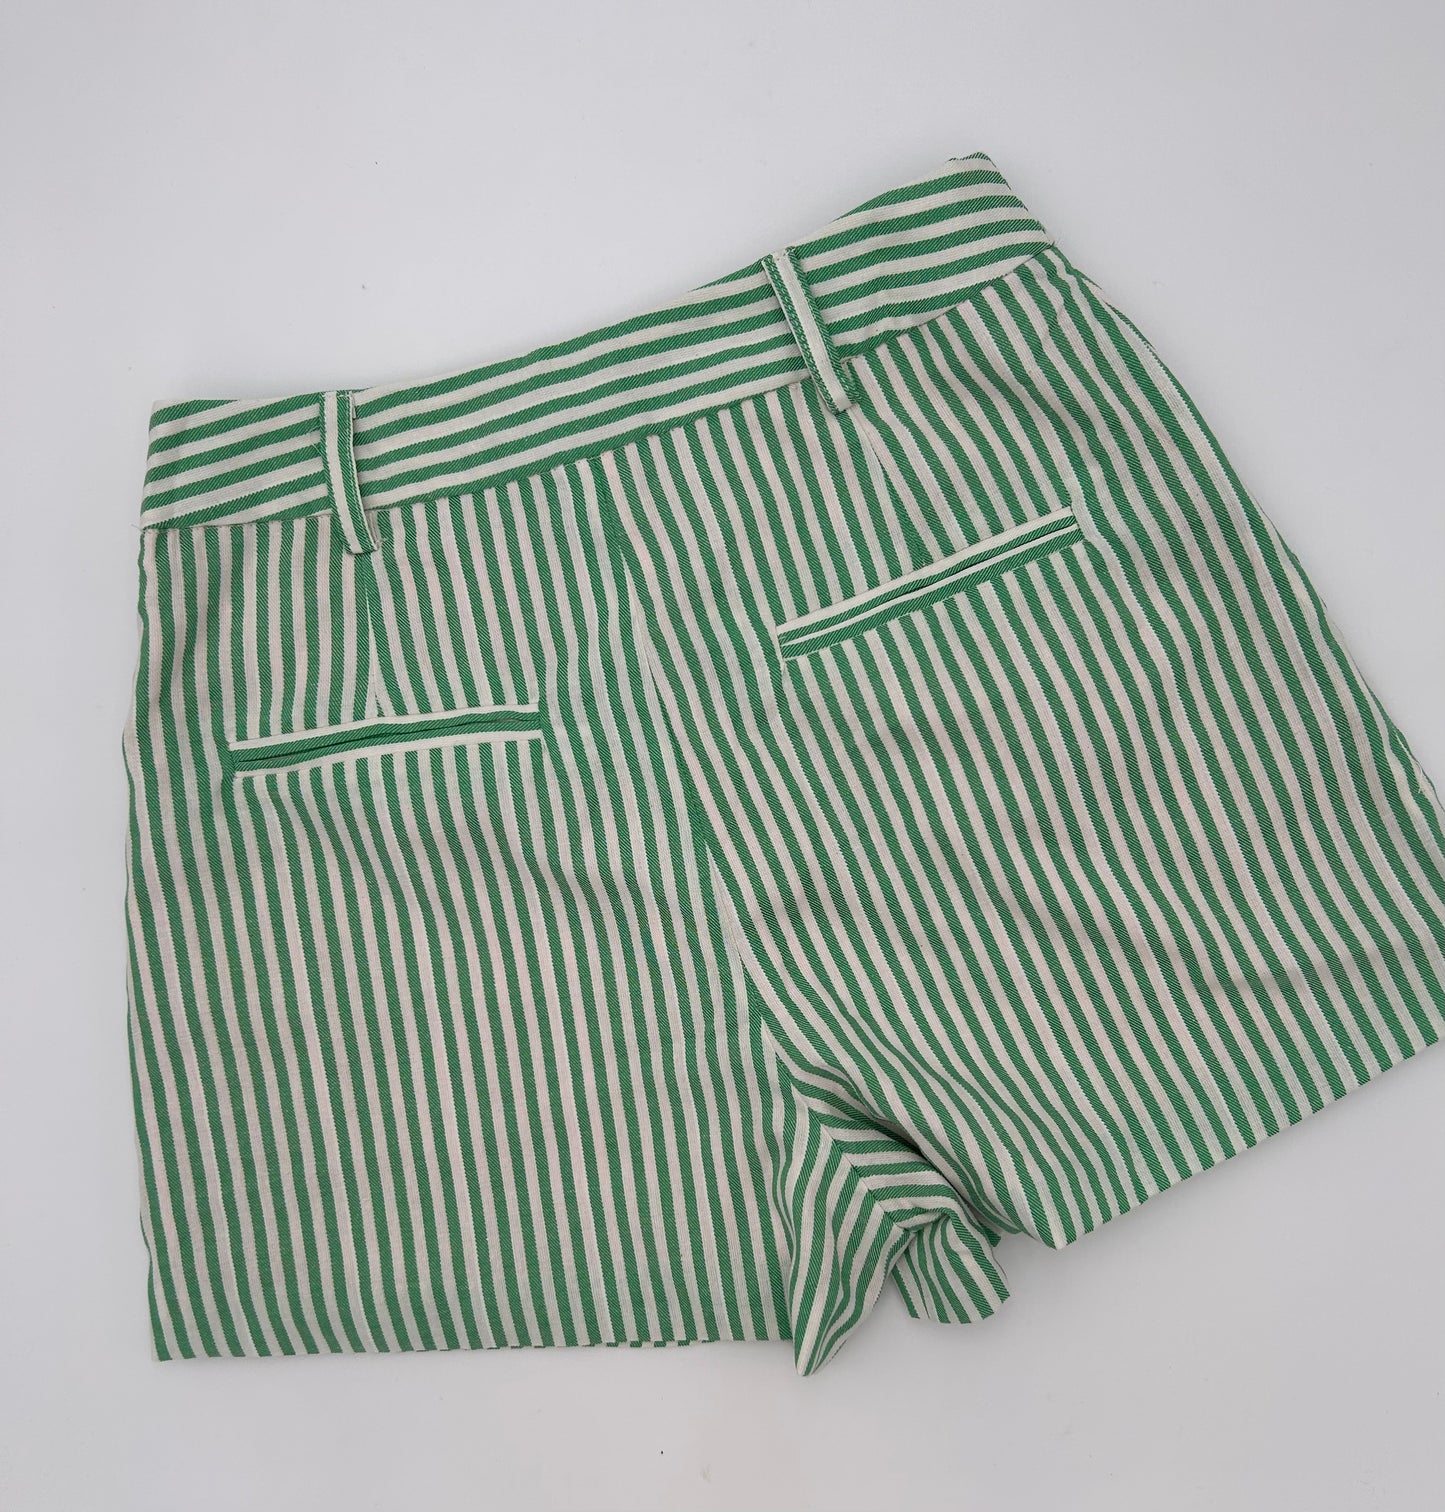 Green Stripe Shorts